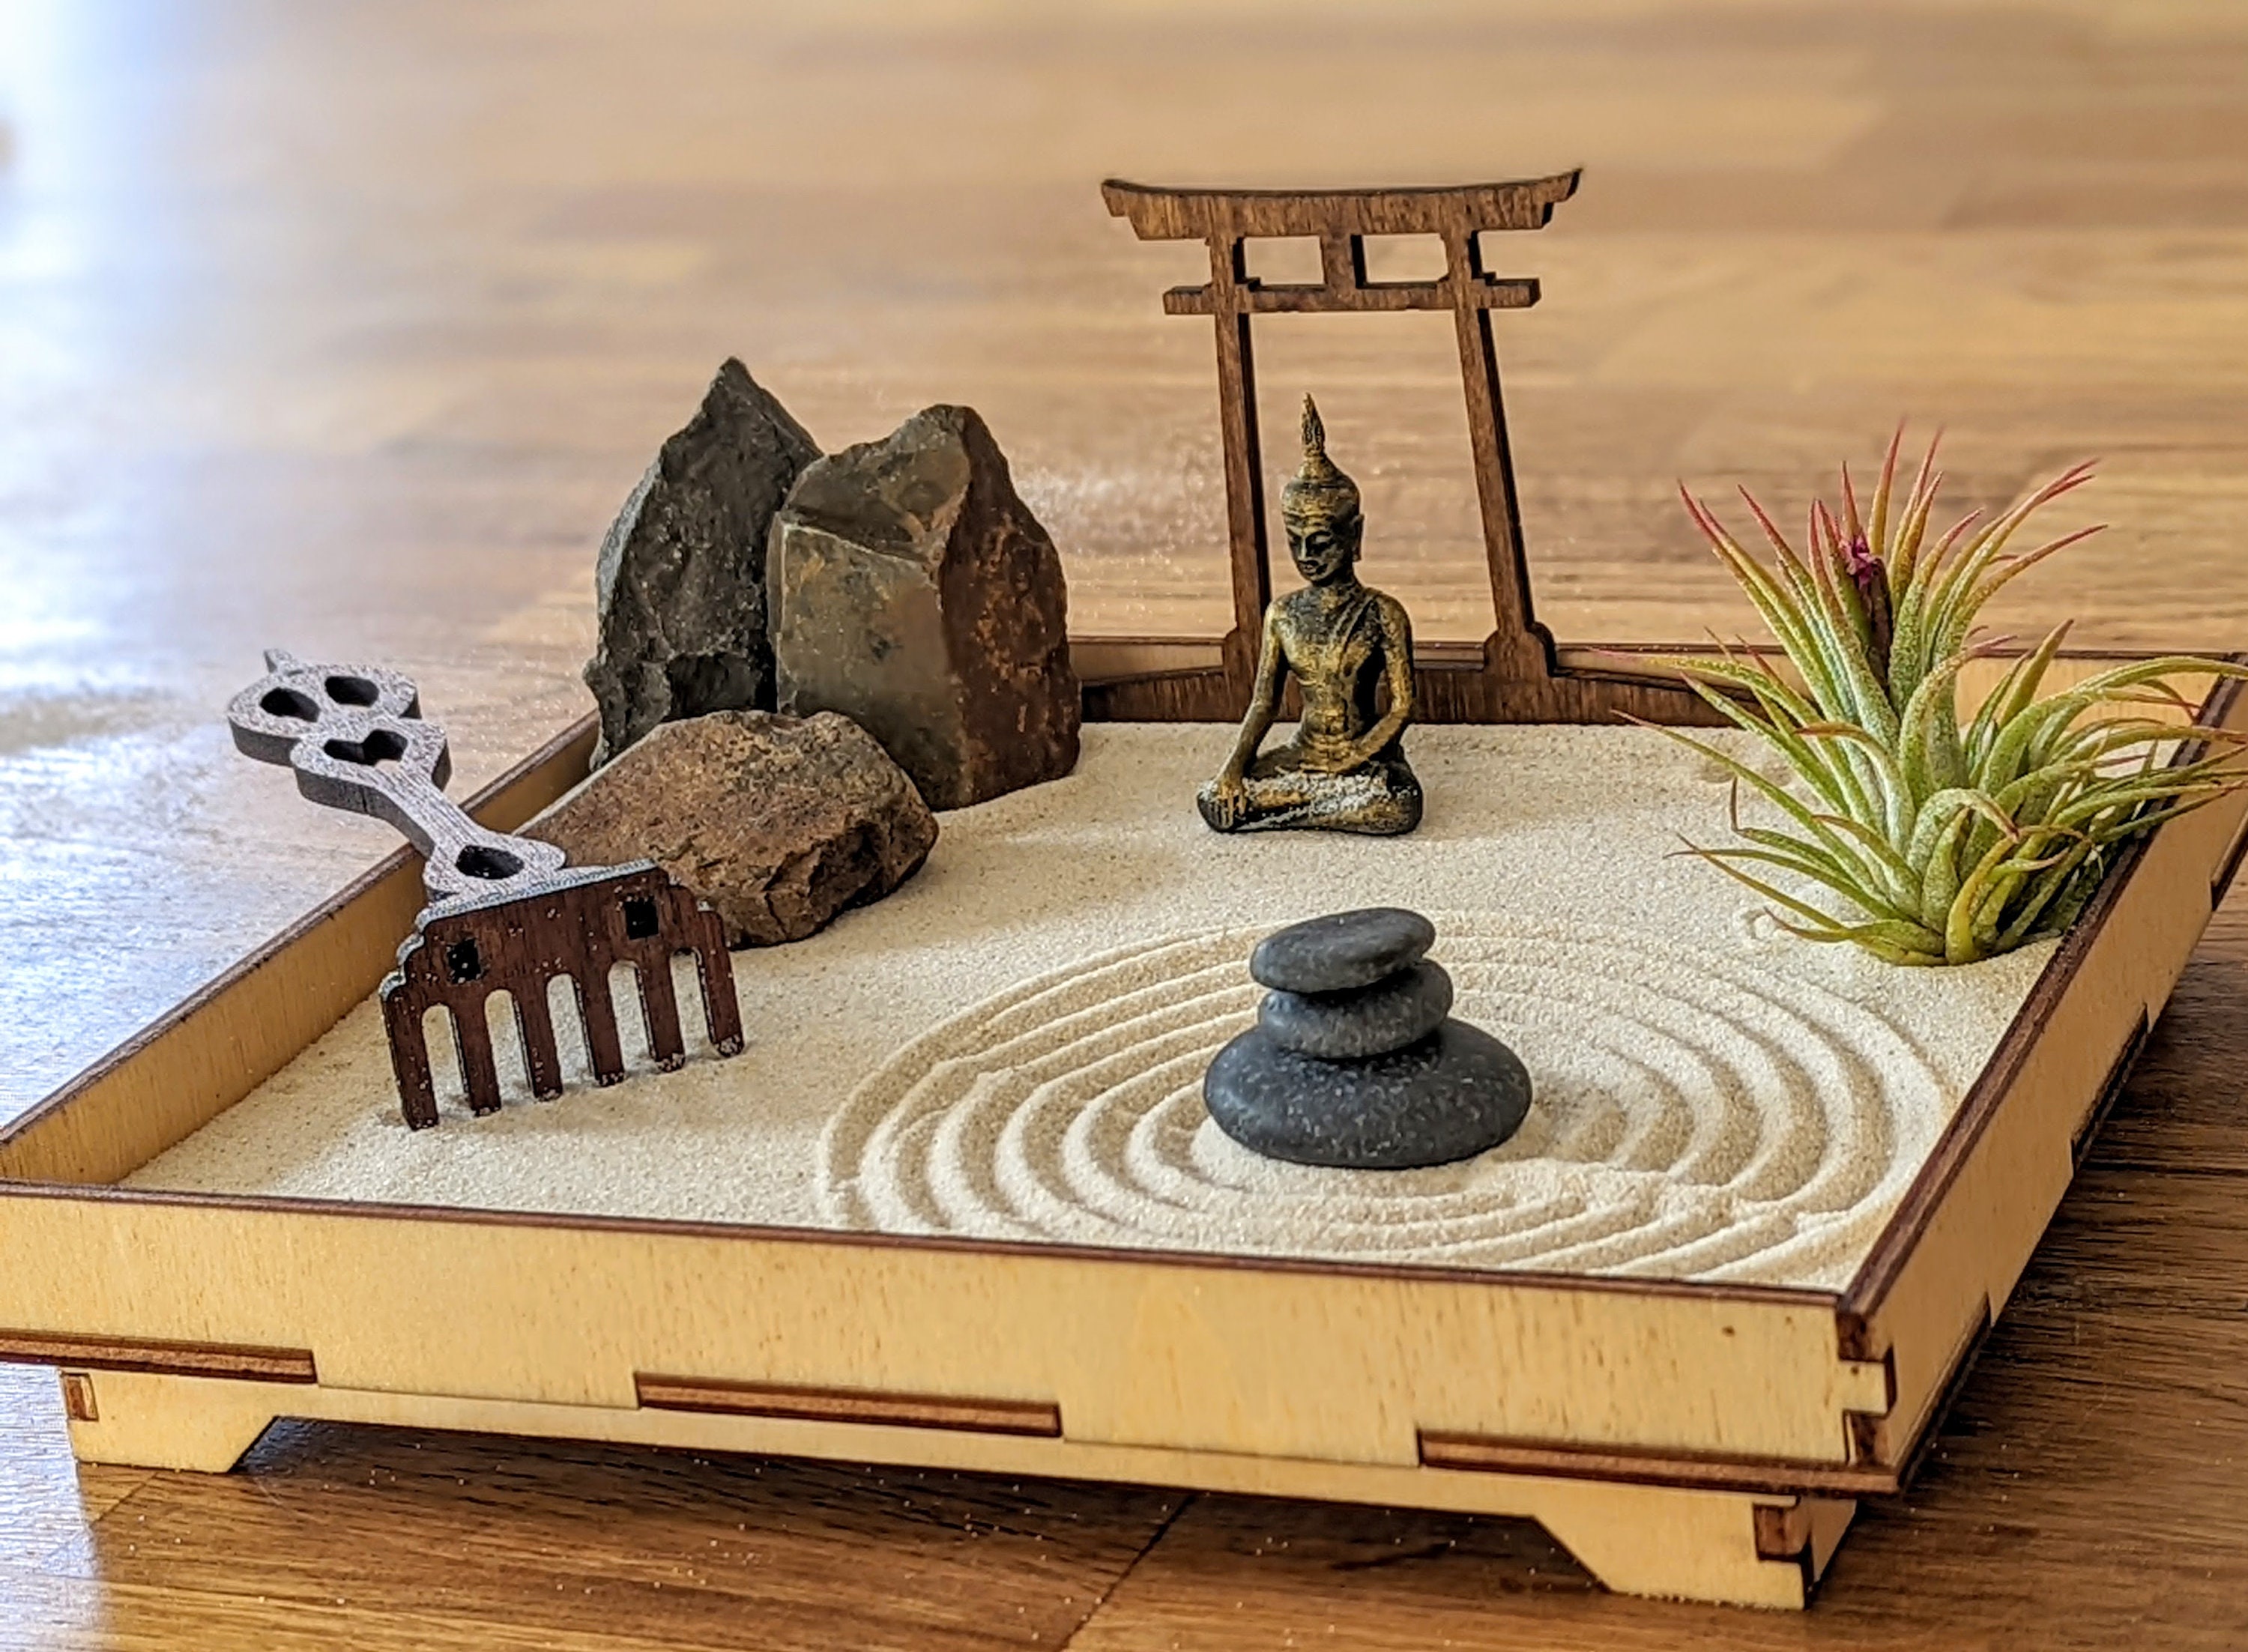 Handmade Zen Garden Set With Buddha Figure, Torii With Rake for